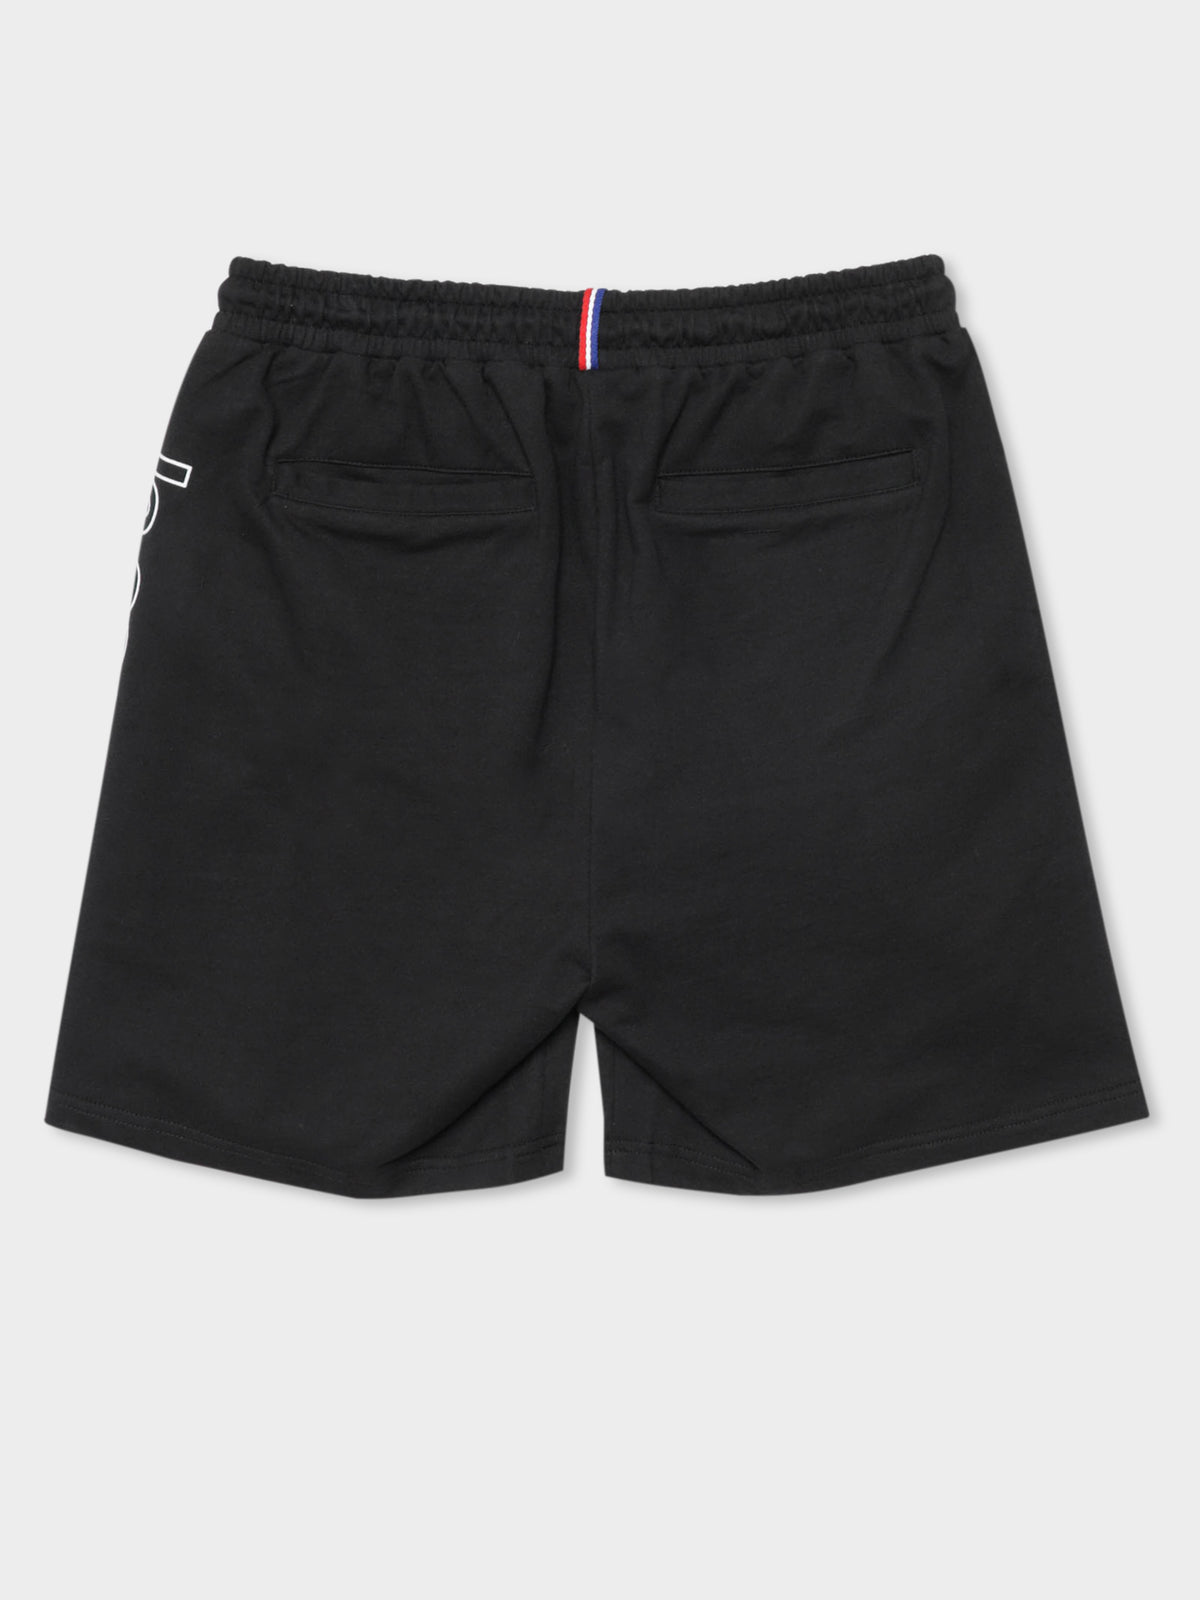 Monaco Fleece Shorts in Black